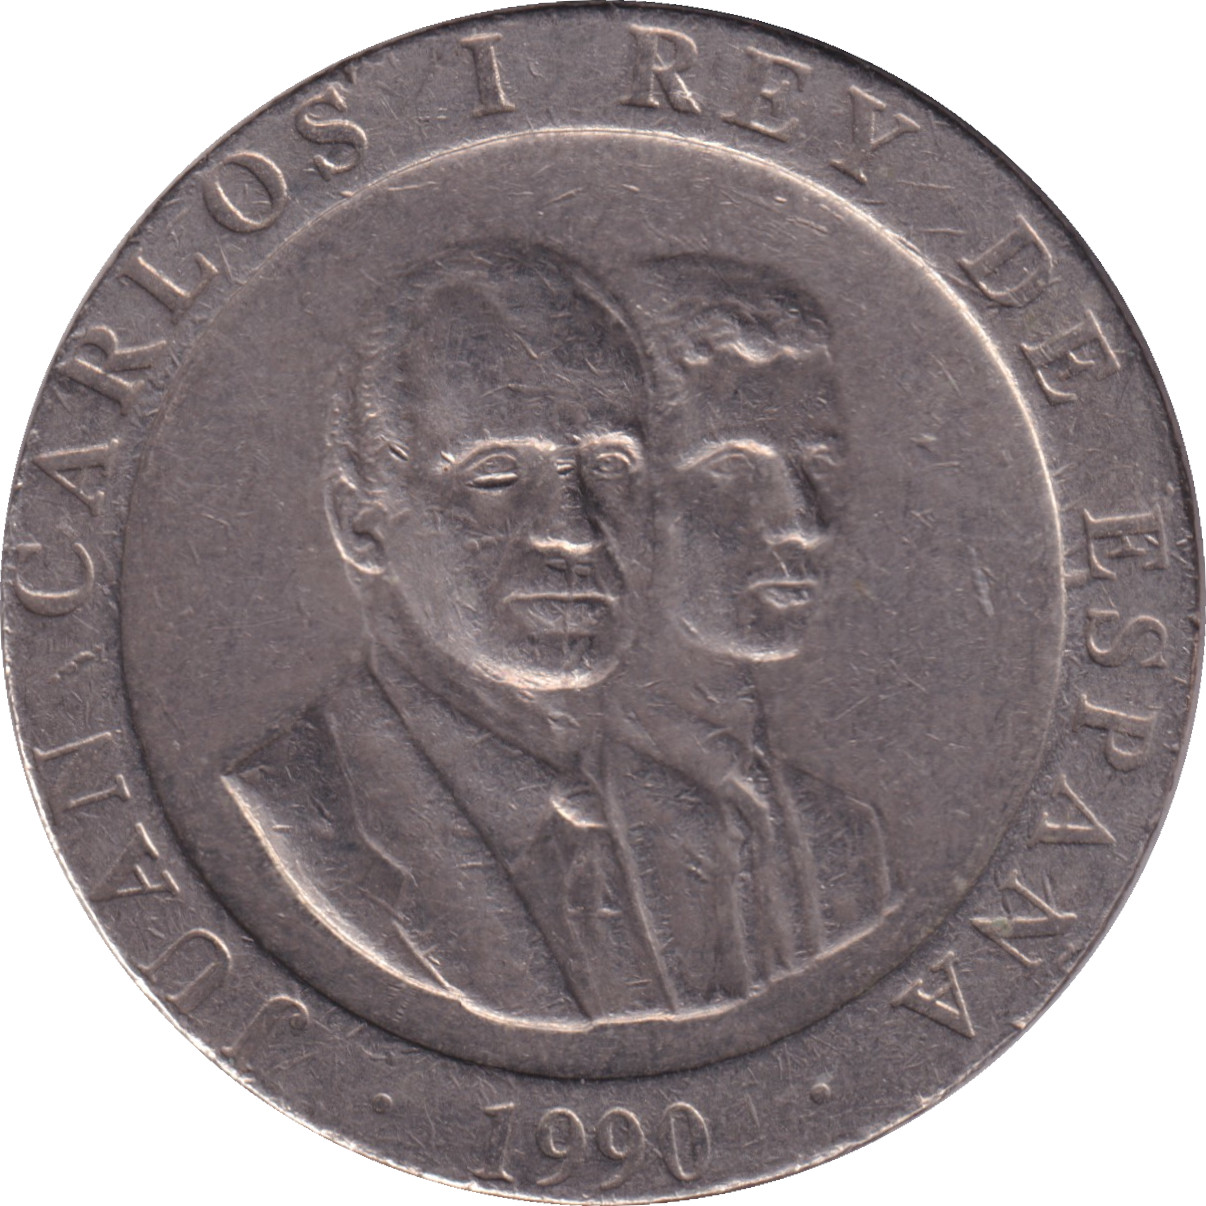 200 pesetas - Juan Carlos I - Cybèle